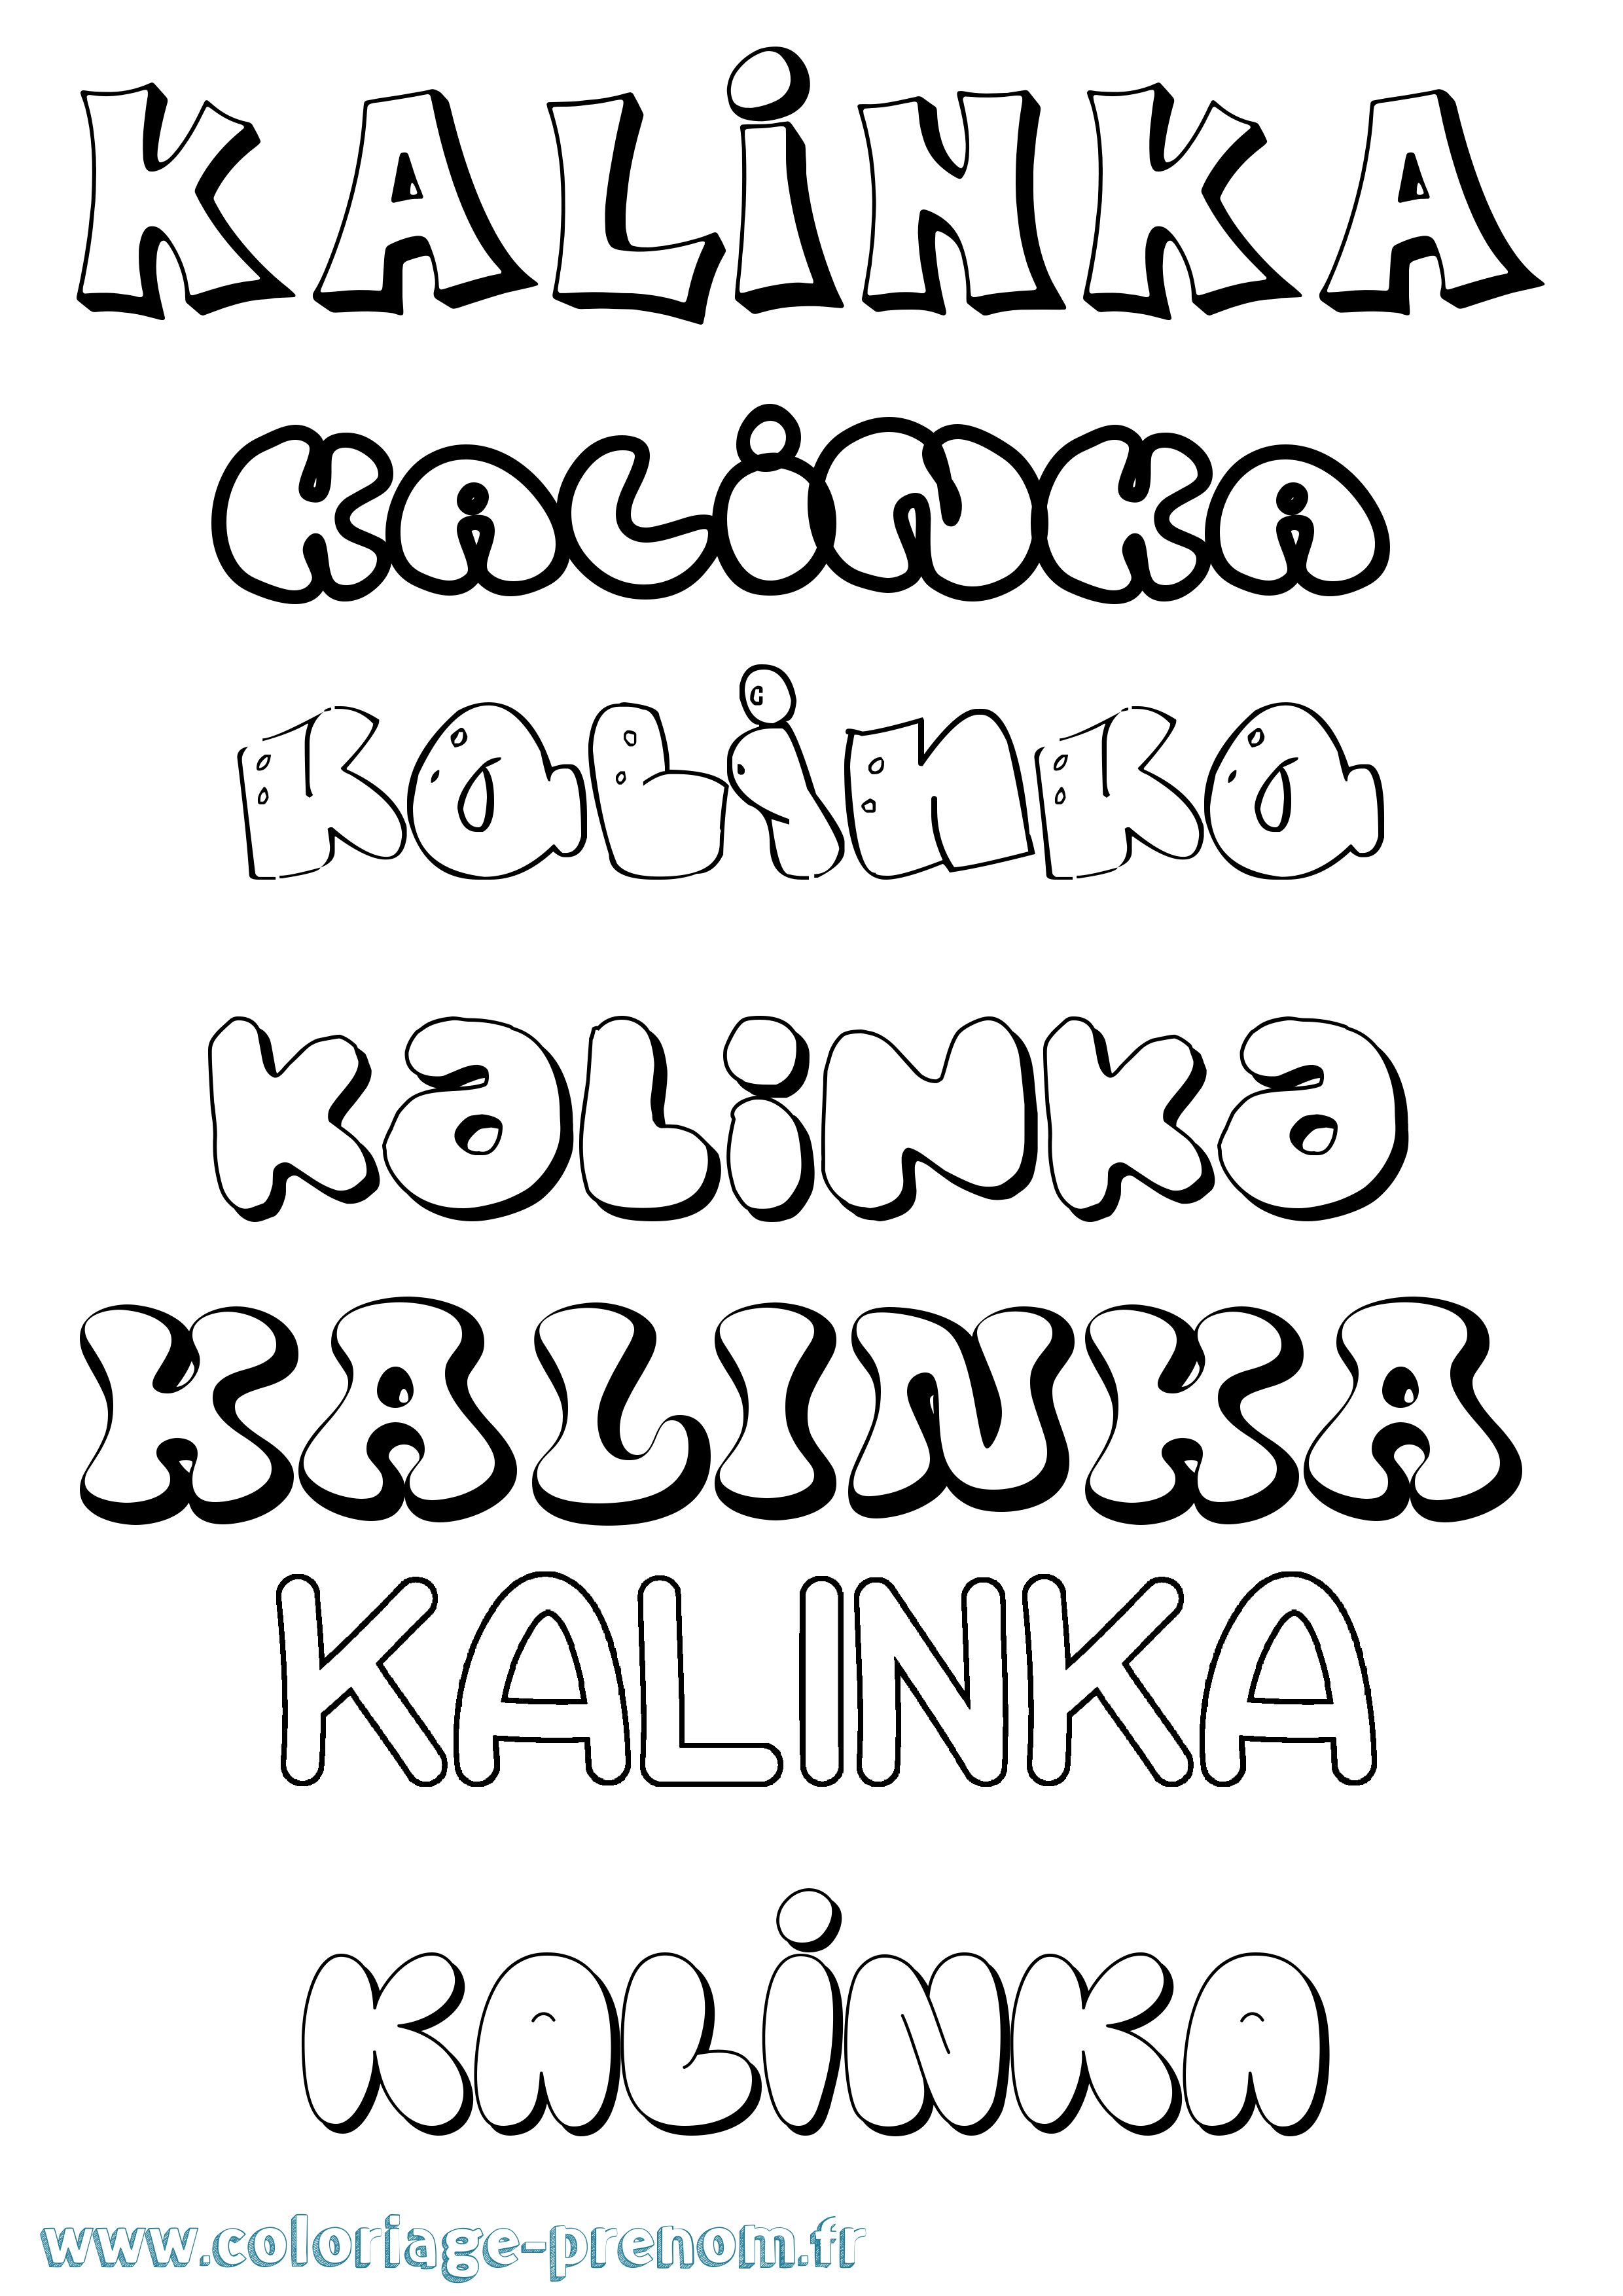 Coloriage prénom Kalinka Bubble